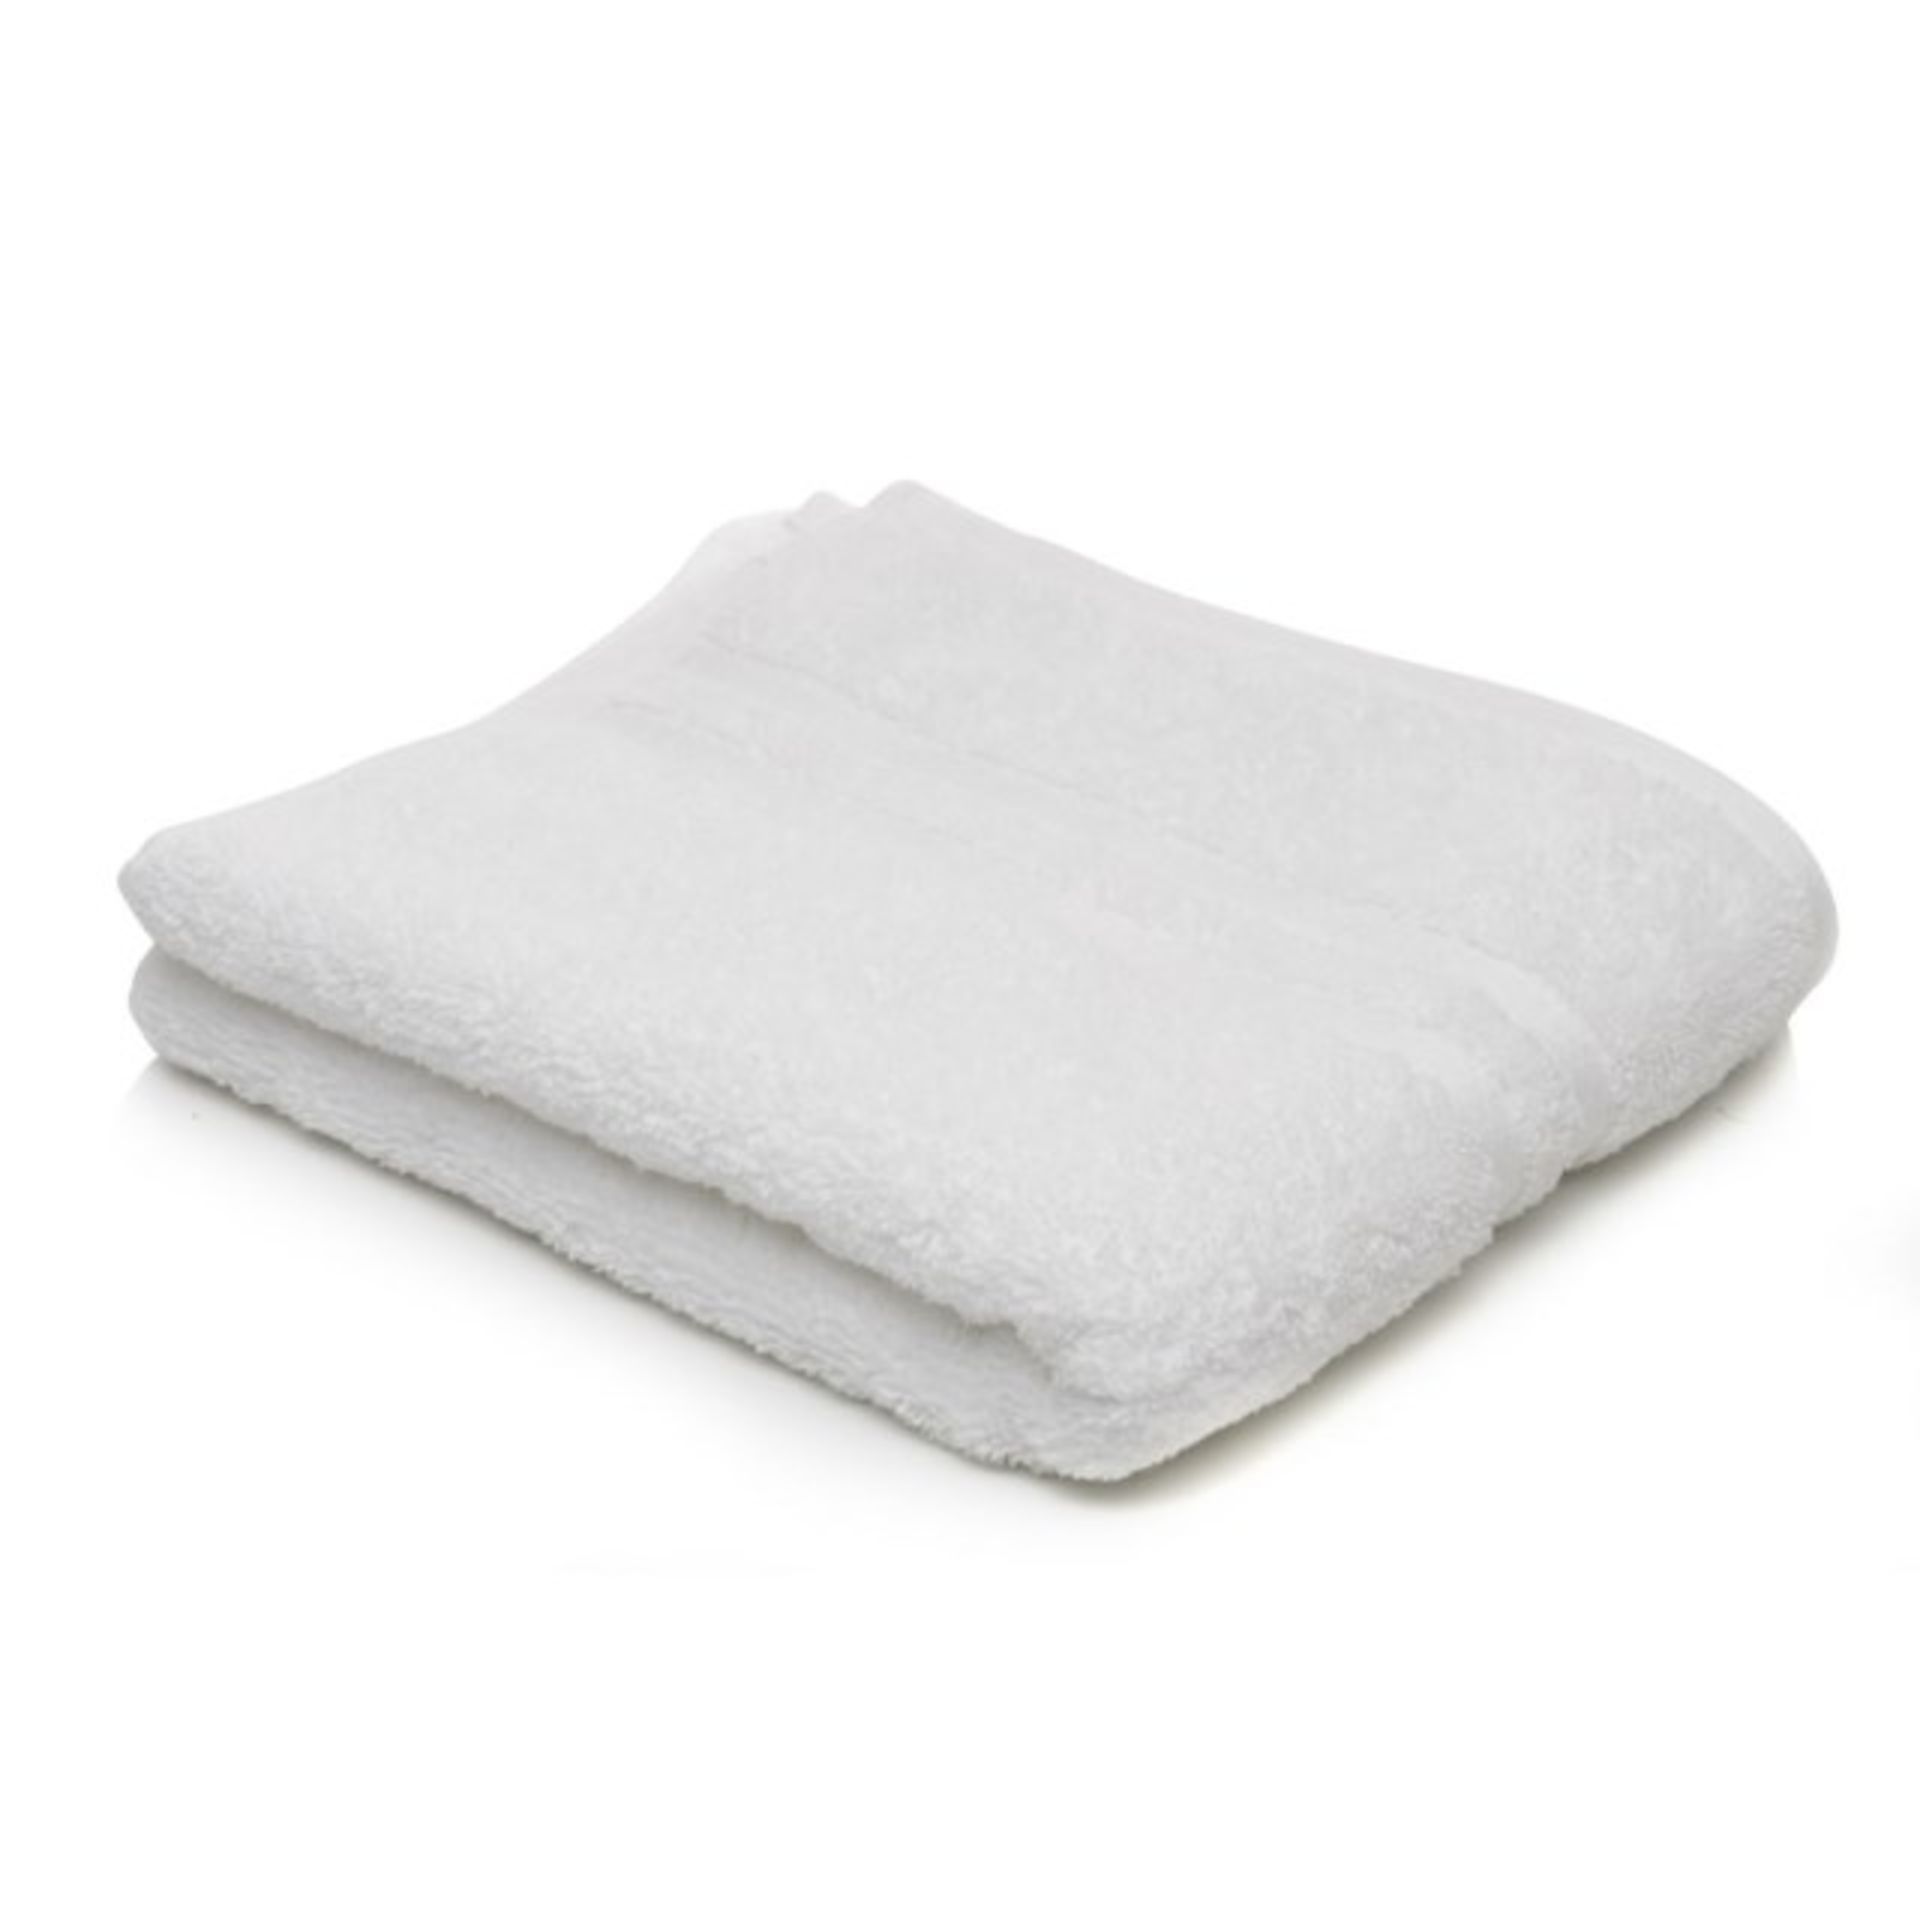 V *TRADE QTY* Brand New Hotel Quality Cotton Bath Towel 70 x 140cm RRP £19.99 X 60 YOUR BID PRICE TO